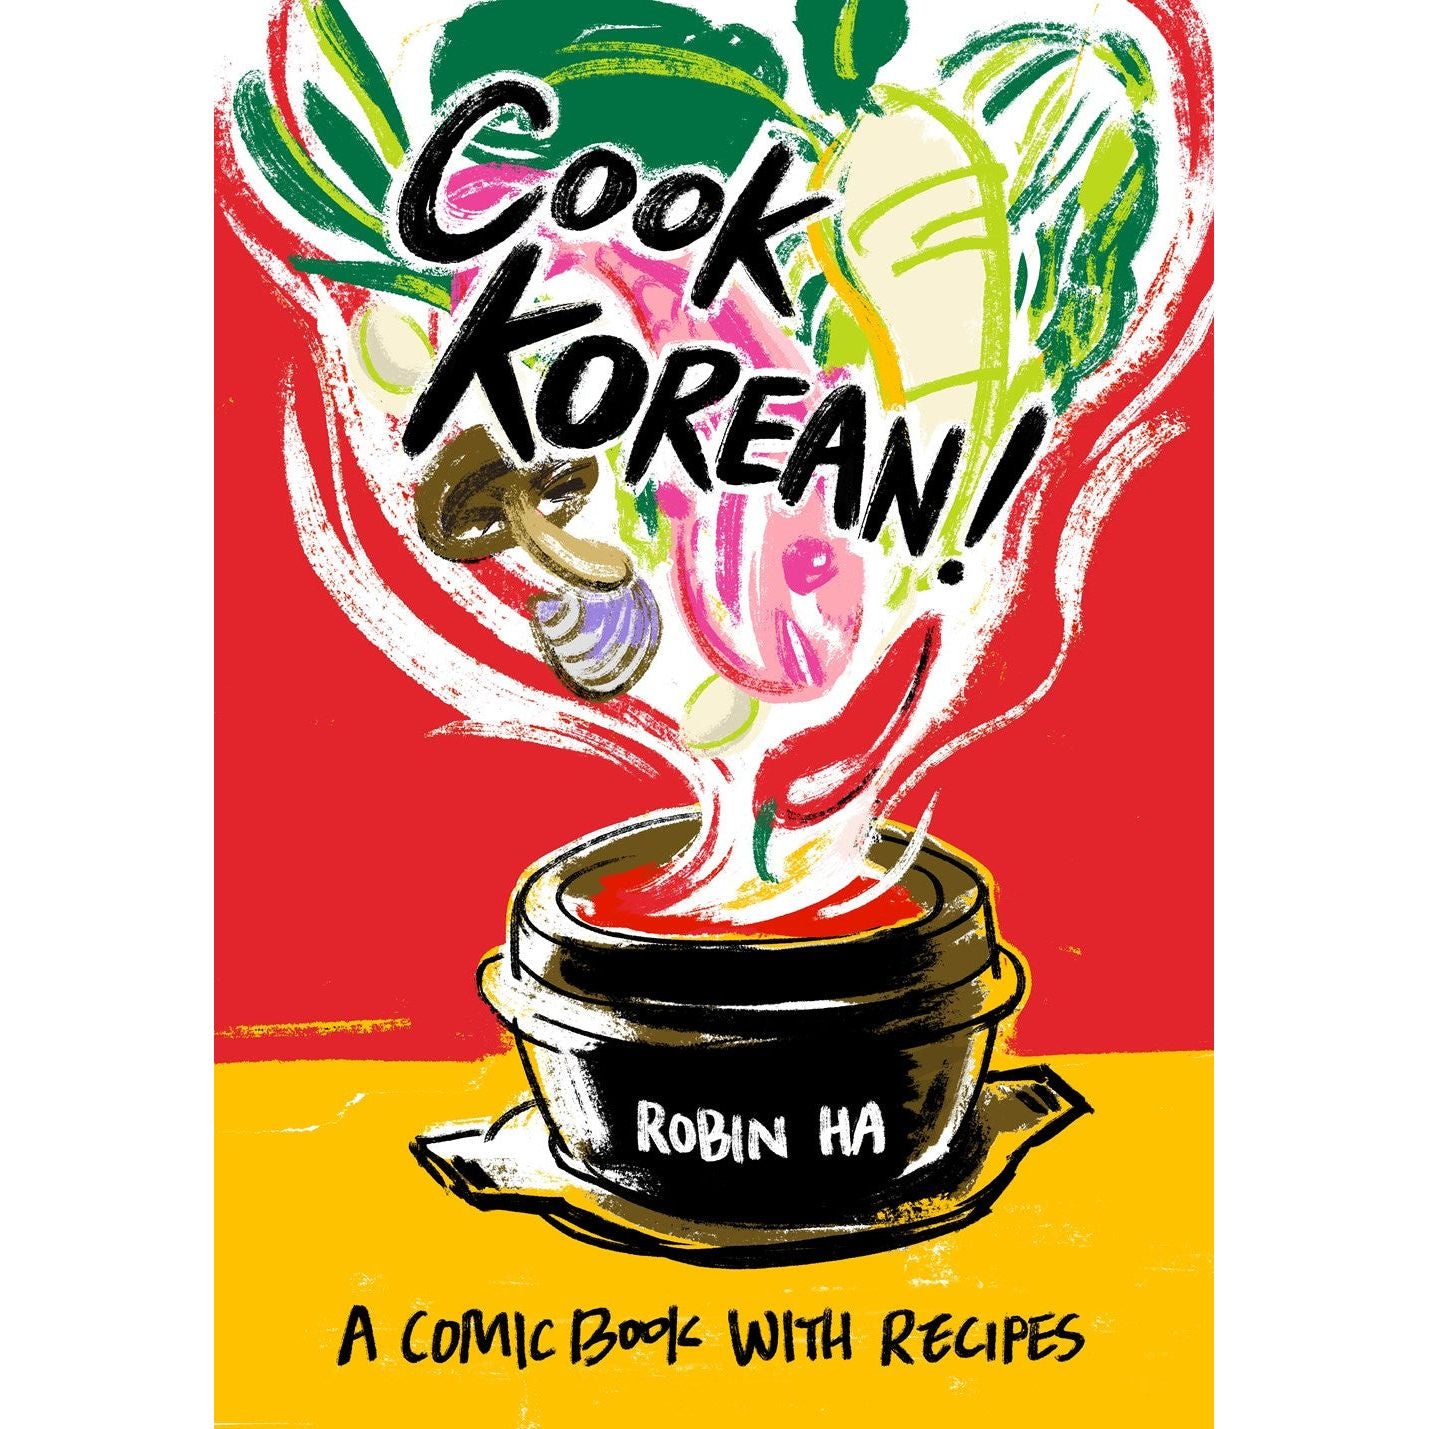 Cook Korean!: A Comic Book with Recipes (Robin Ha)